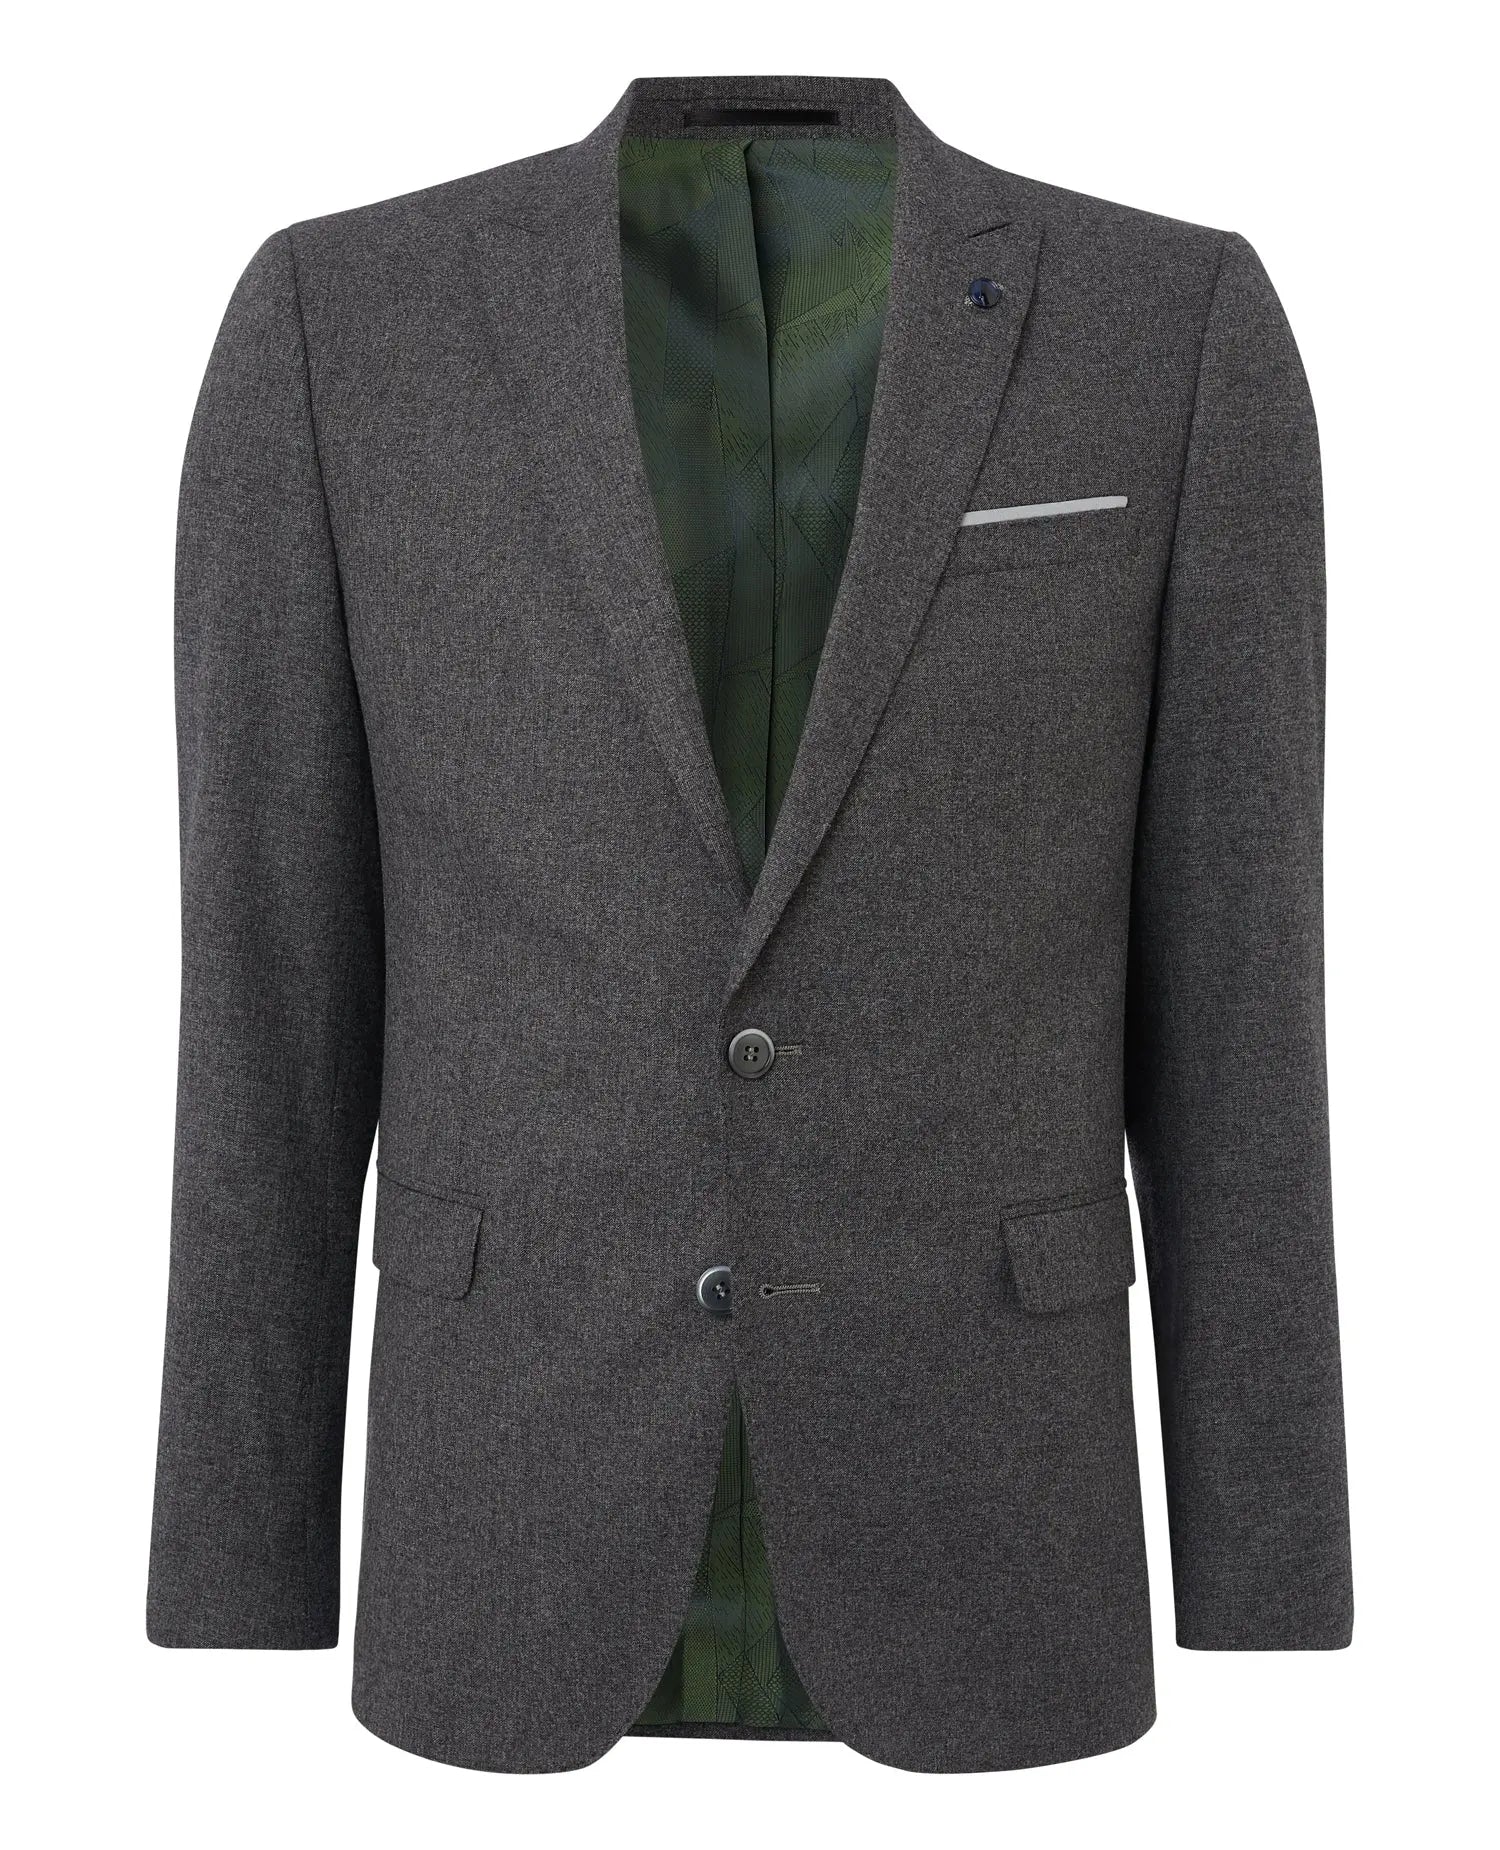 Remus Uomo Mario Charcoal Grey Textured Suit Jacket